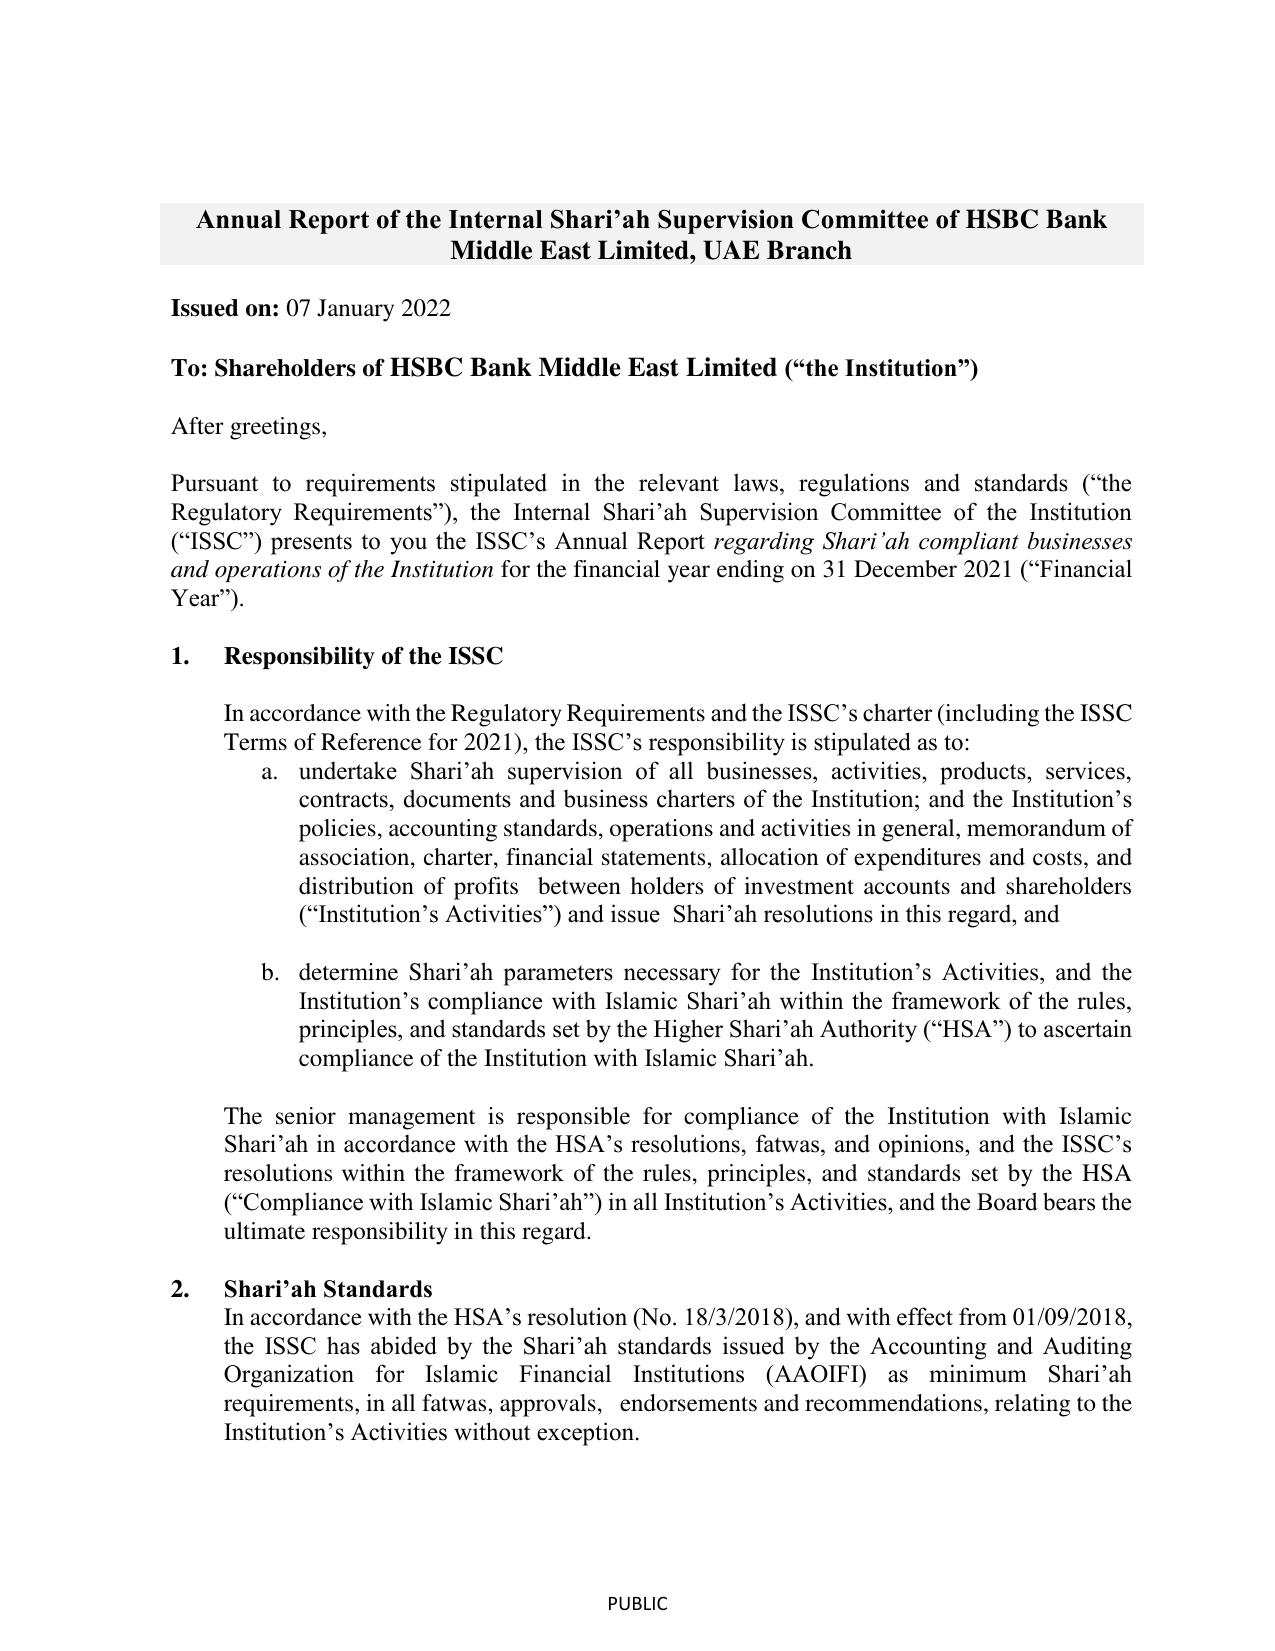 HSBC.AE 2021 Annual Report